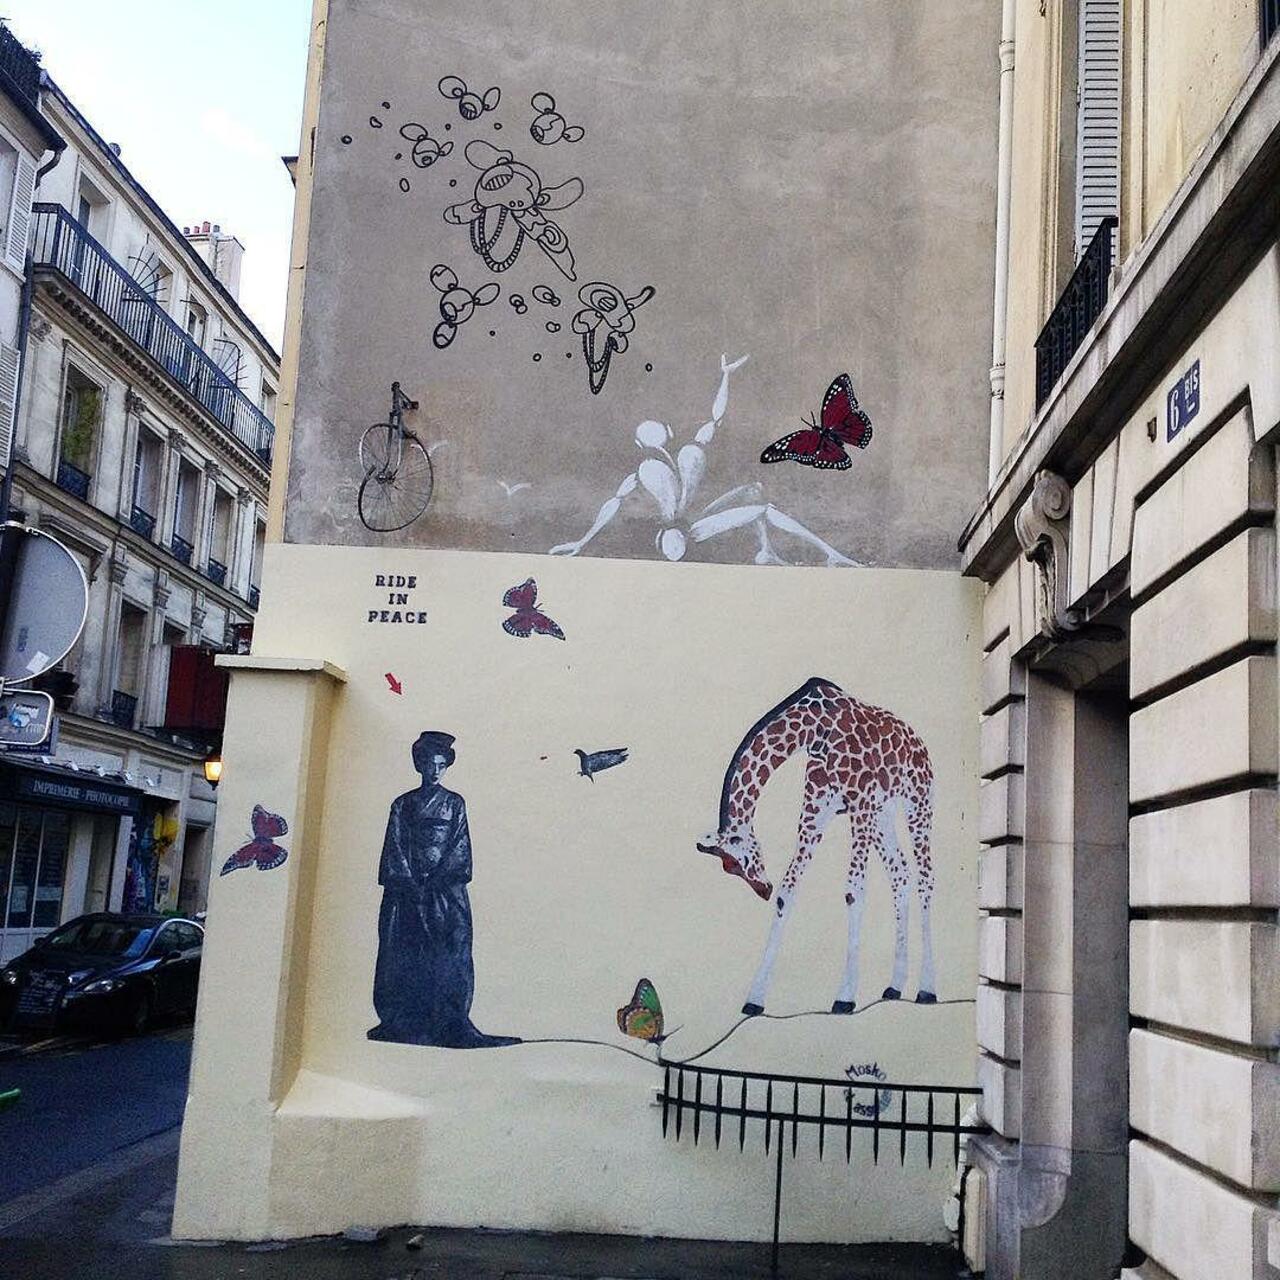 #Paris #graffiti photo by @vgsman http://ift.tt/1Gw1epU #StreetArt http://t.co/F9H3V1WdUL